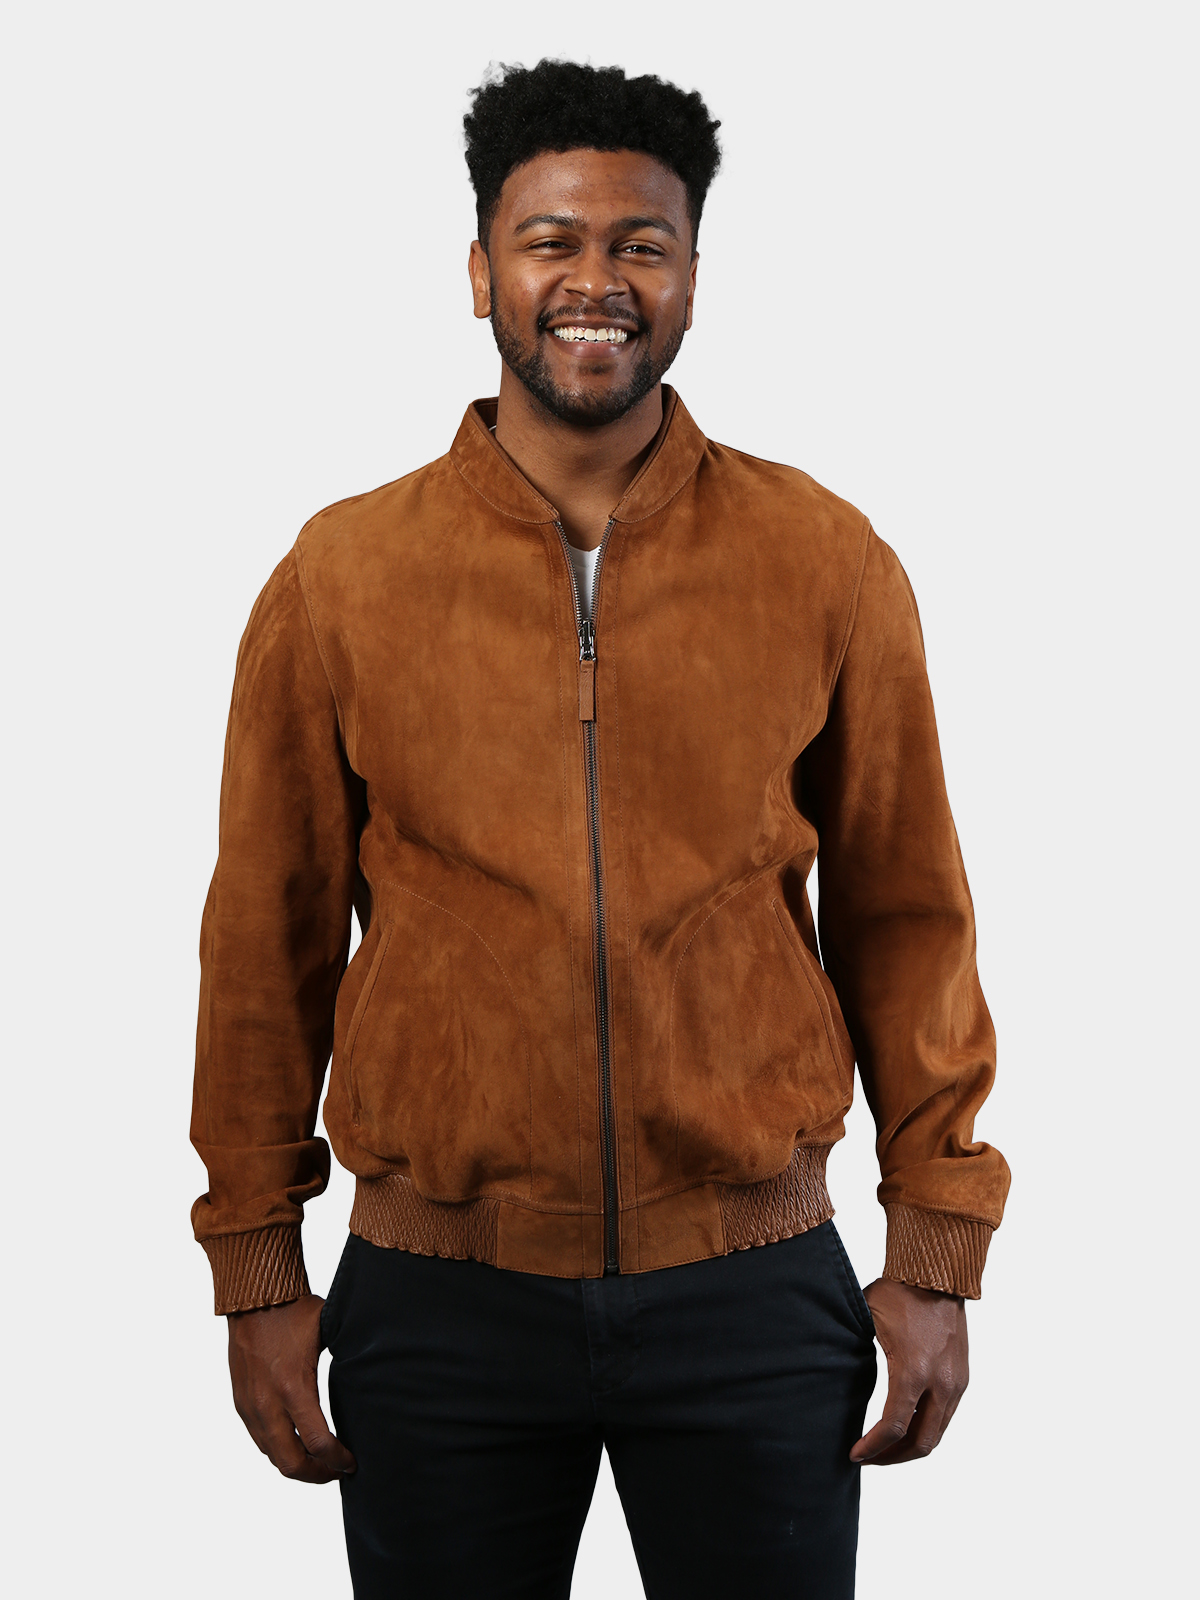 New Men's Brown Suede Leather Jacket 100% Real Lambskin Style Slim Fit  Jacket | eBay